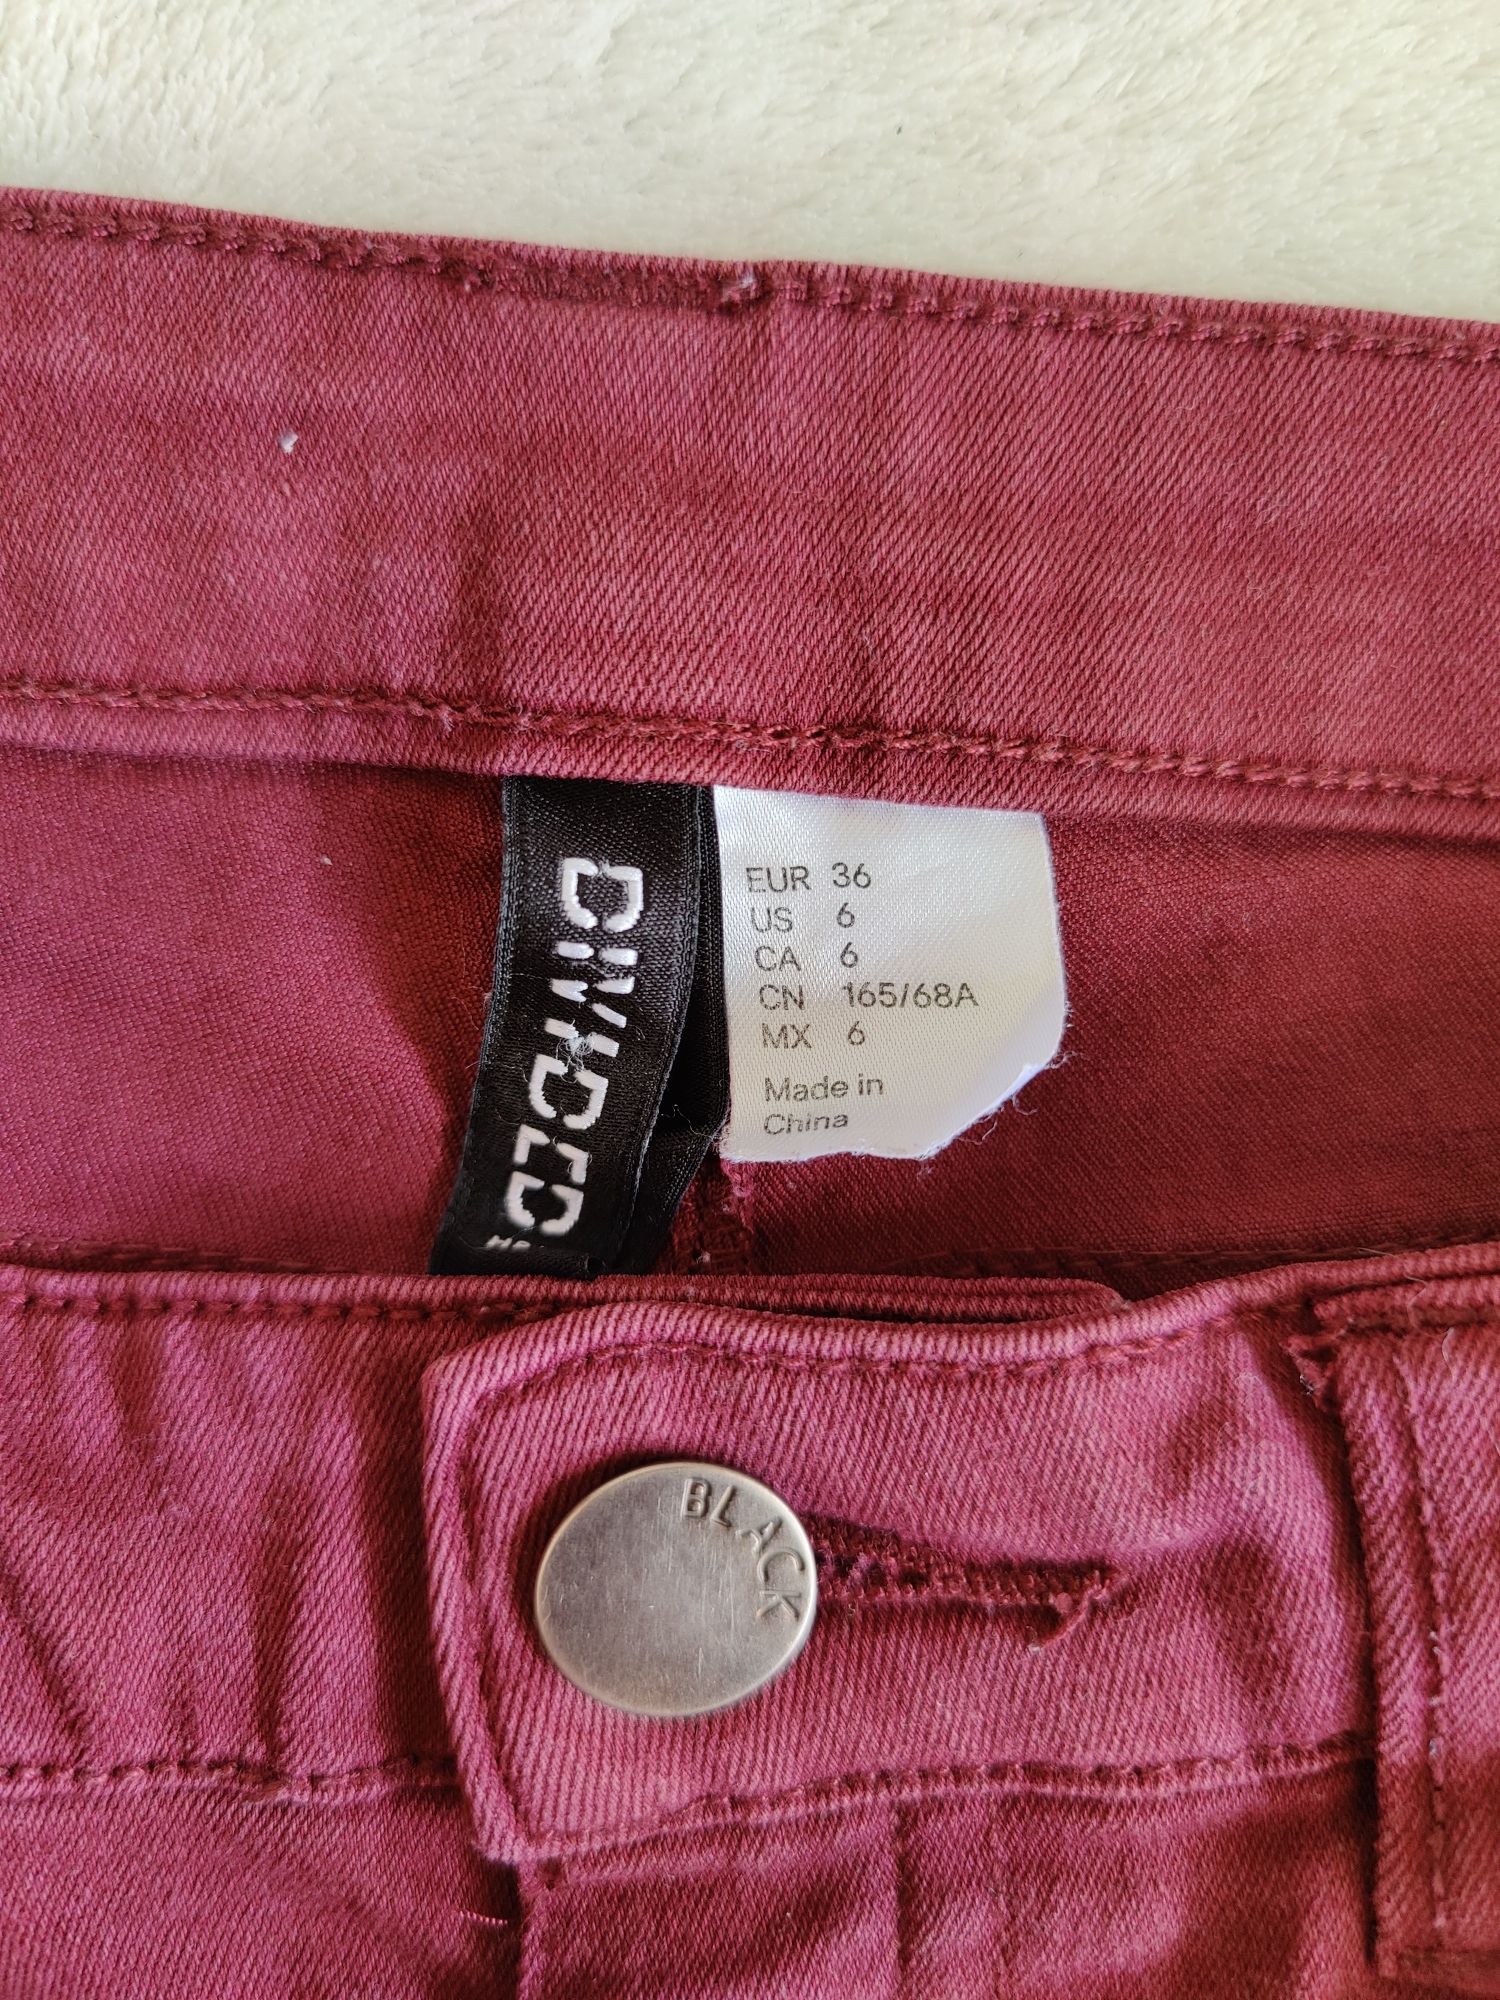 Spodnie a'la jeansowe jeansy Divided H&M 36 S 165